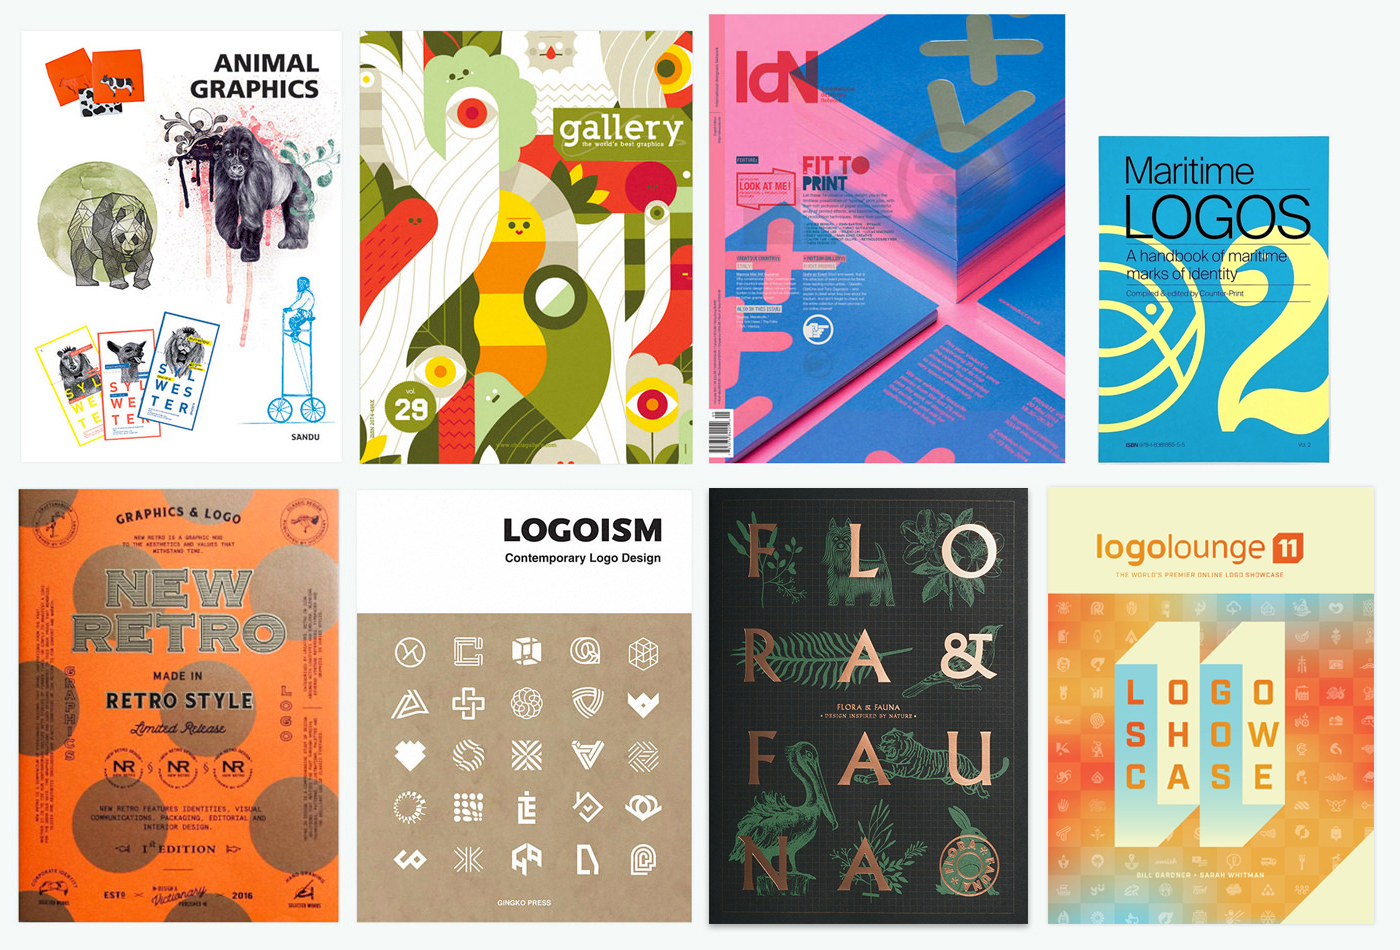 vacaliebres-book-animal-graphics-sandu-sandupublishing-victionary-idn-magazine-newretro-logoism-counter prints-1